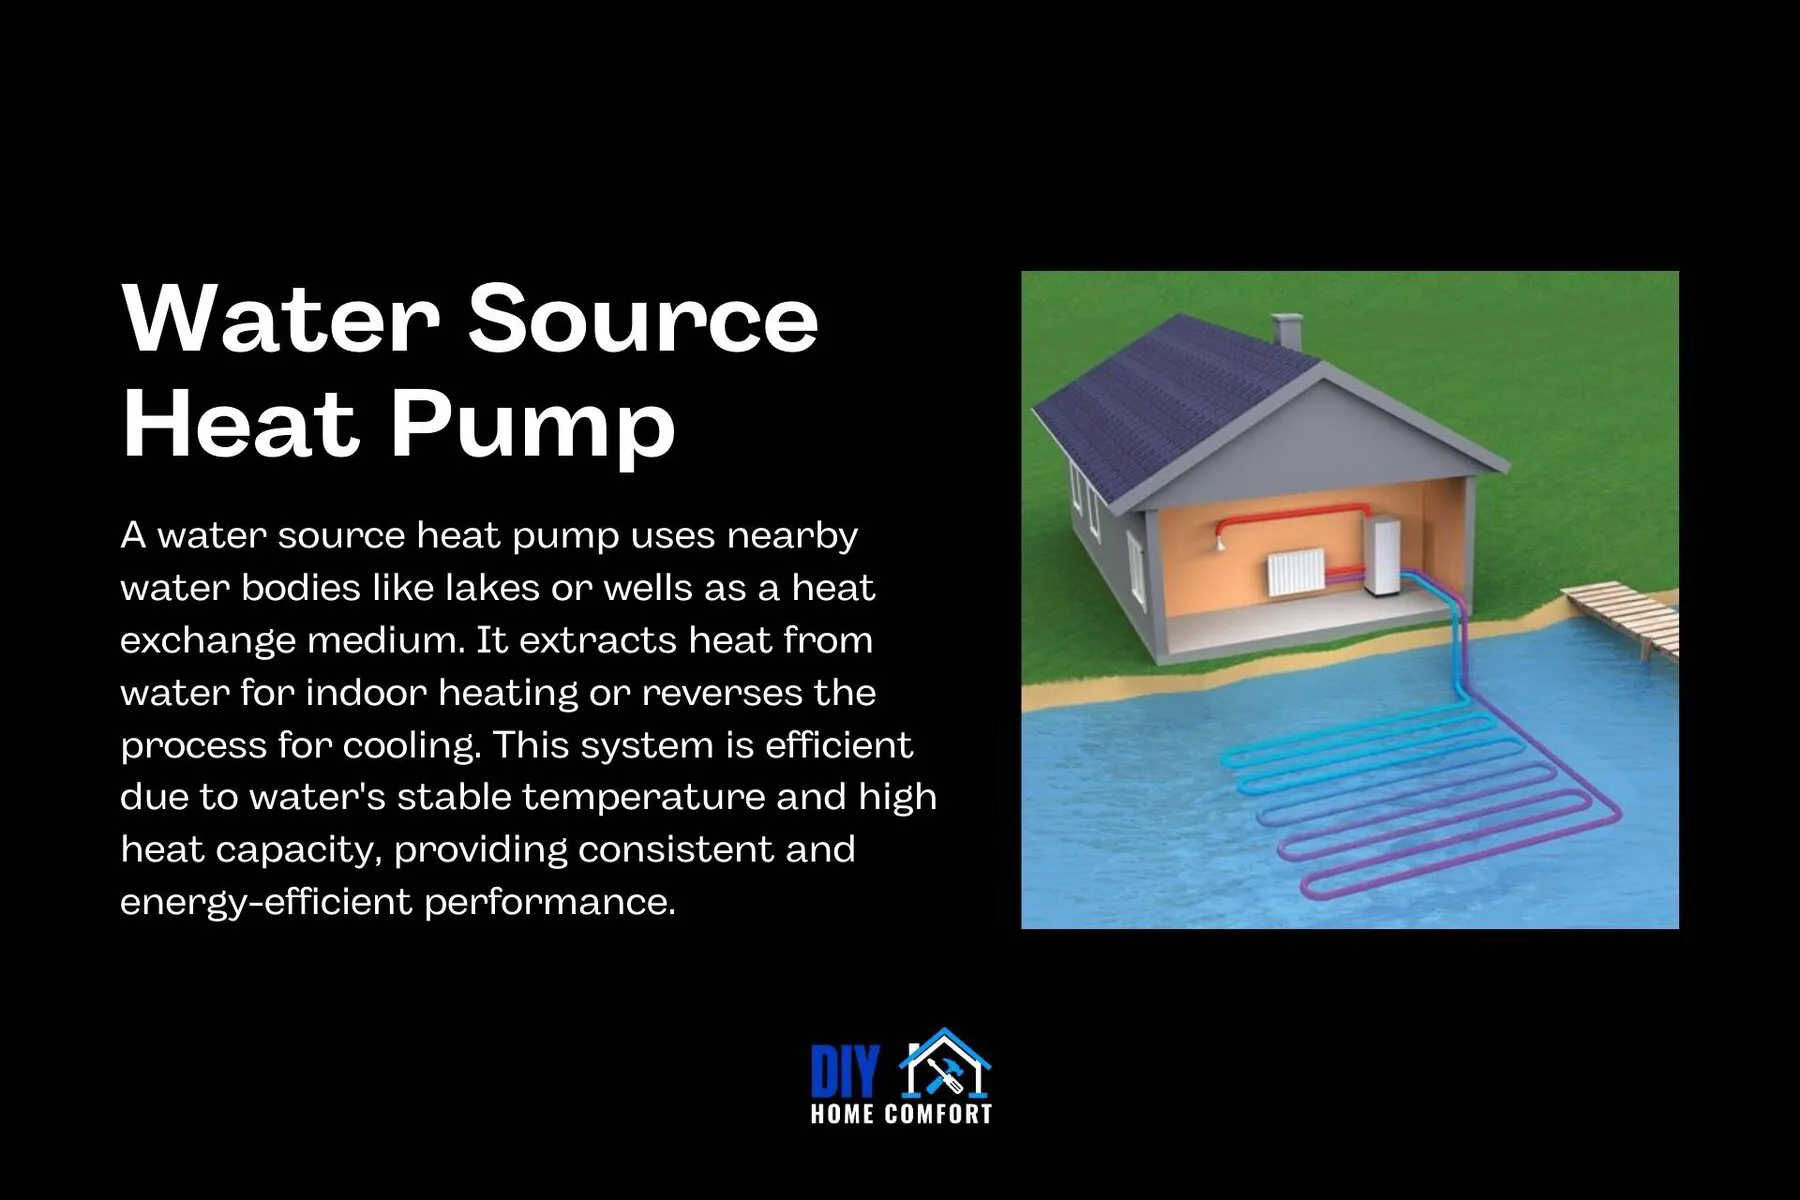 Water Source Heat Pump